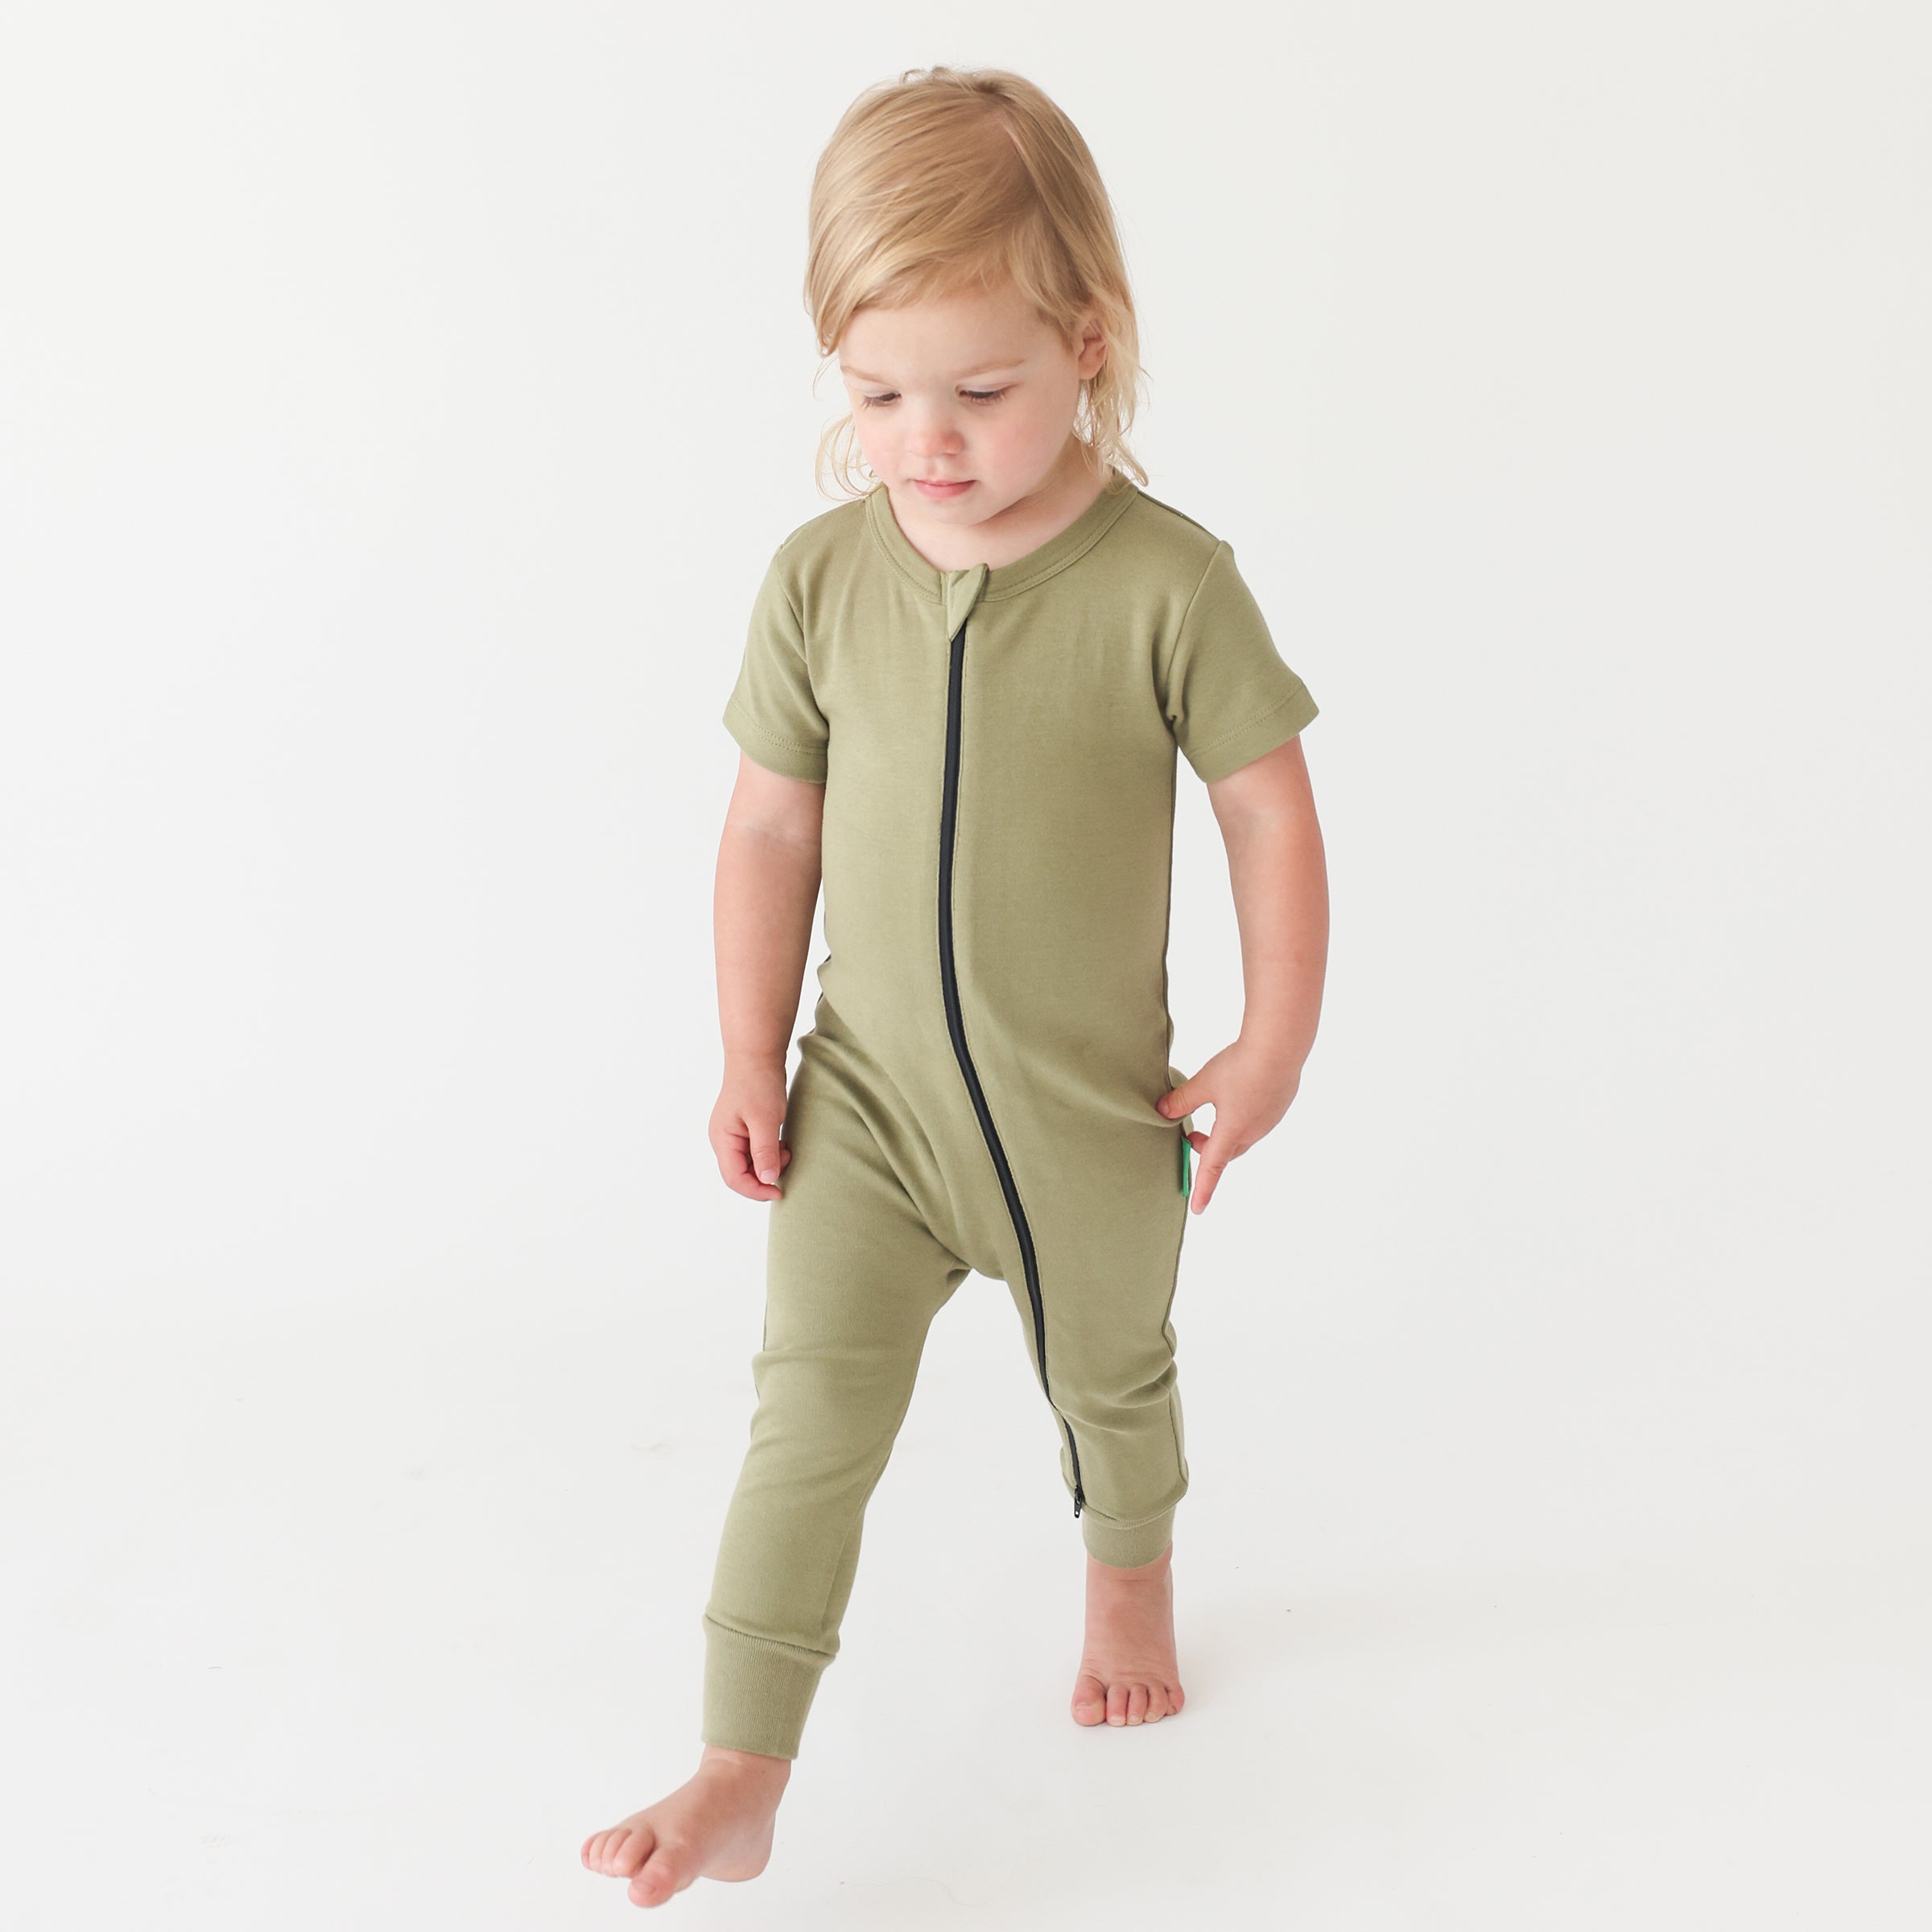 Organic Essential Basics '2-Way' Zip Romper - Short Sleeve - Organic Baby Clothes, Kids Clothes, & Gifts | Parade Organics